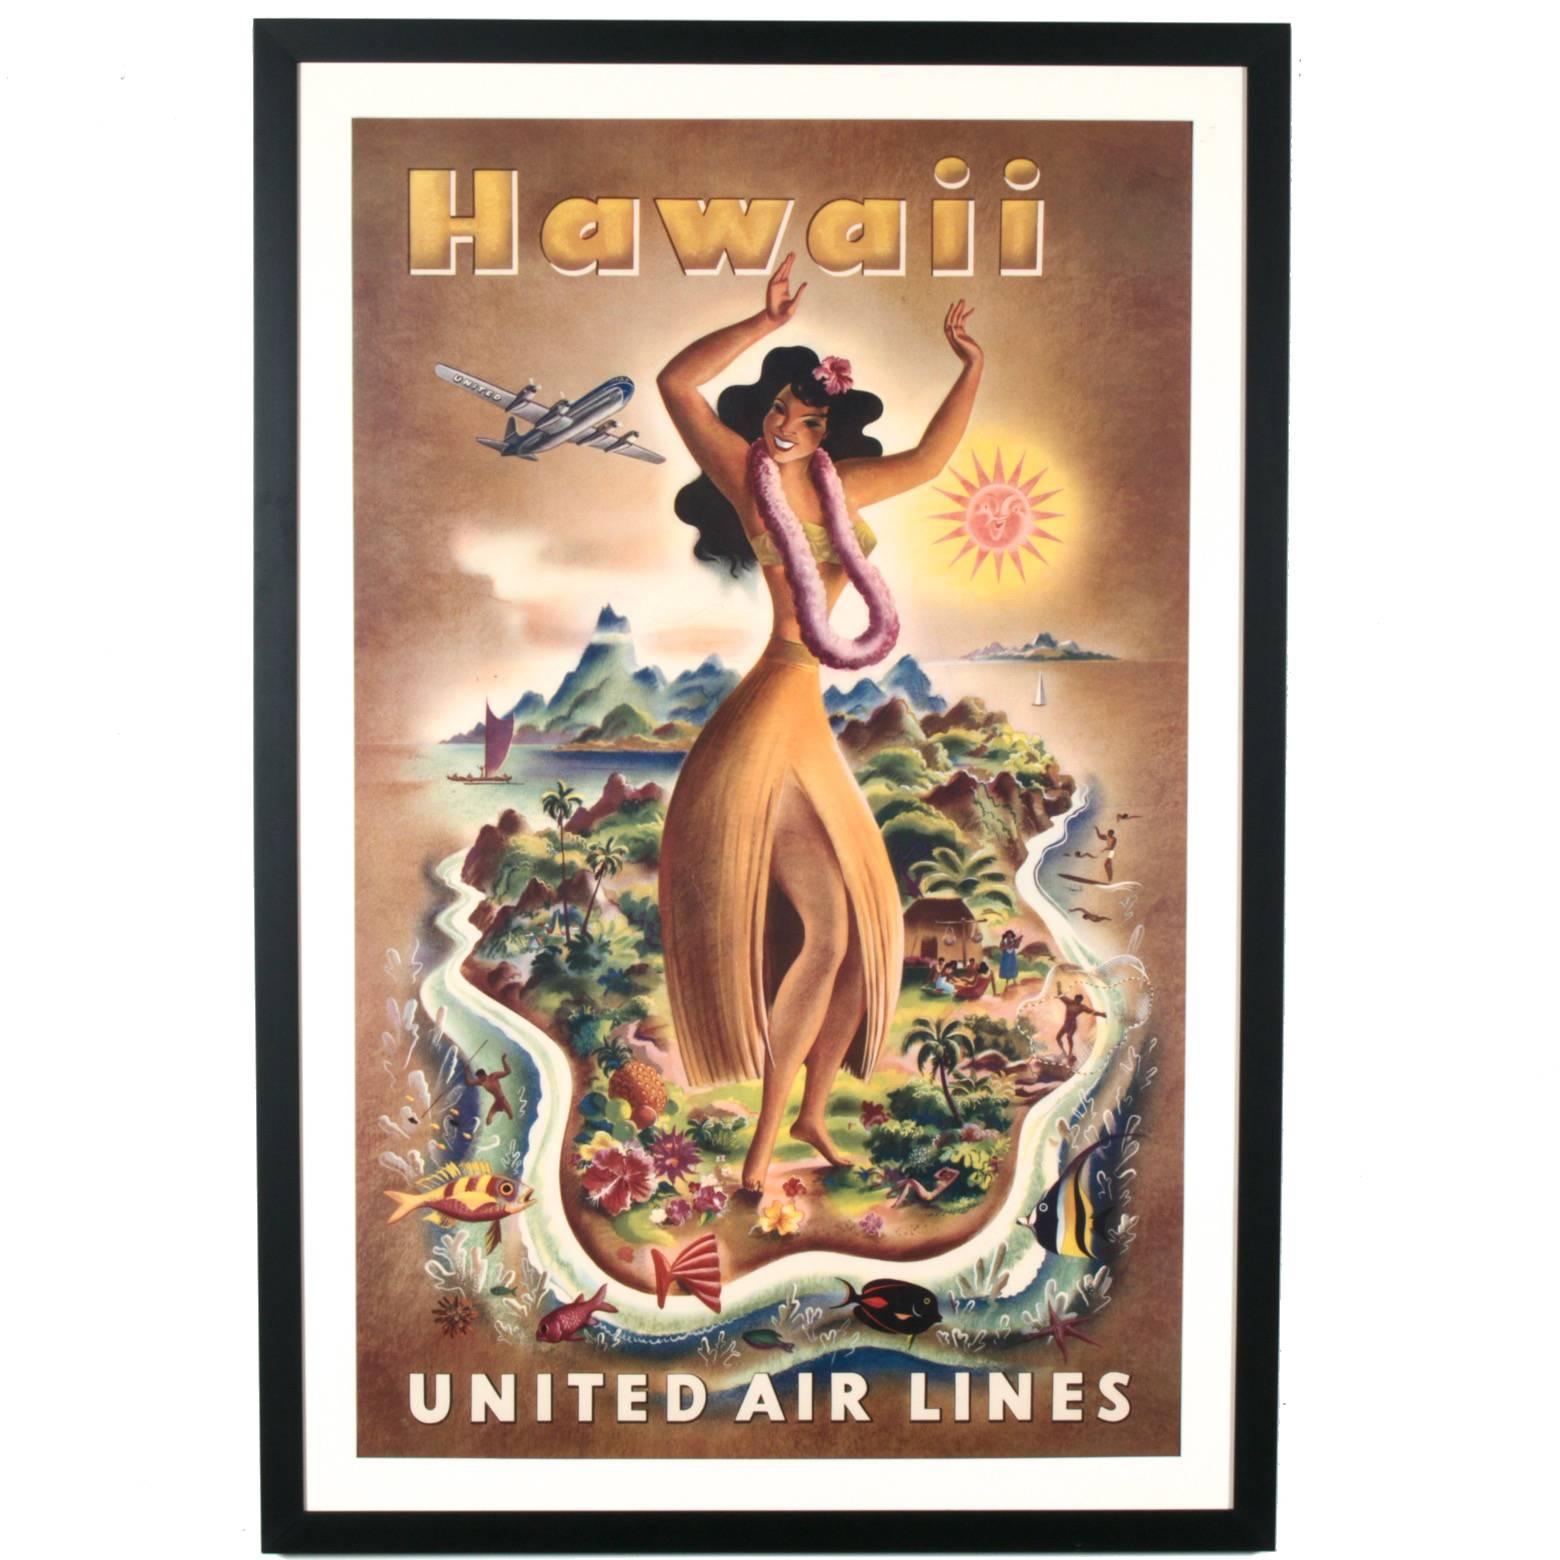 Original 1949 United Air Lines Hawaii Travel Poster Featuring Hula Girl Dancing 